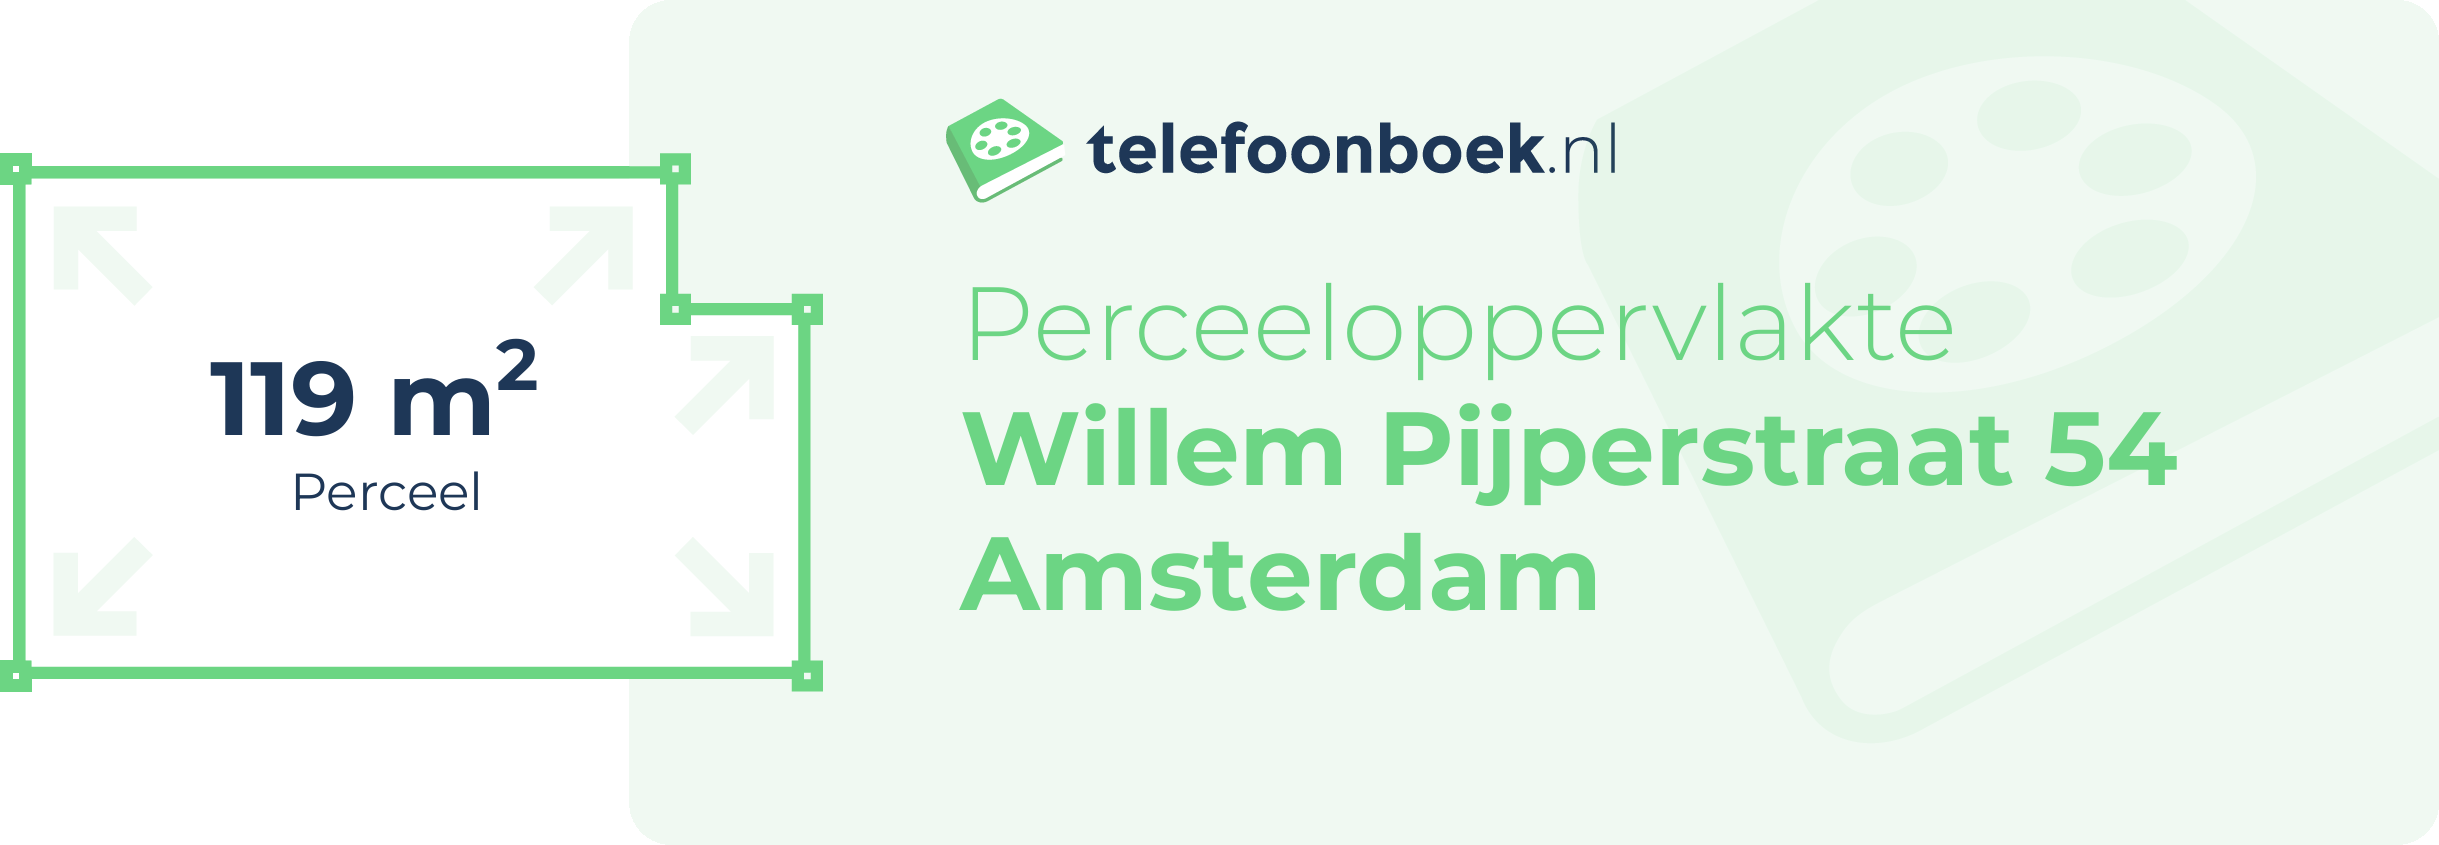 Perceeloppervlakte Willem Pijperstraat 54 Amsterdam